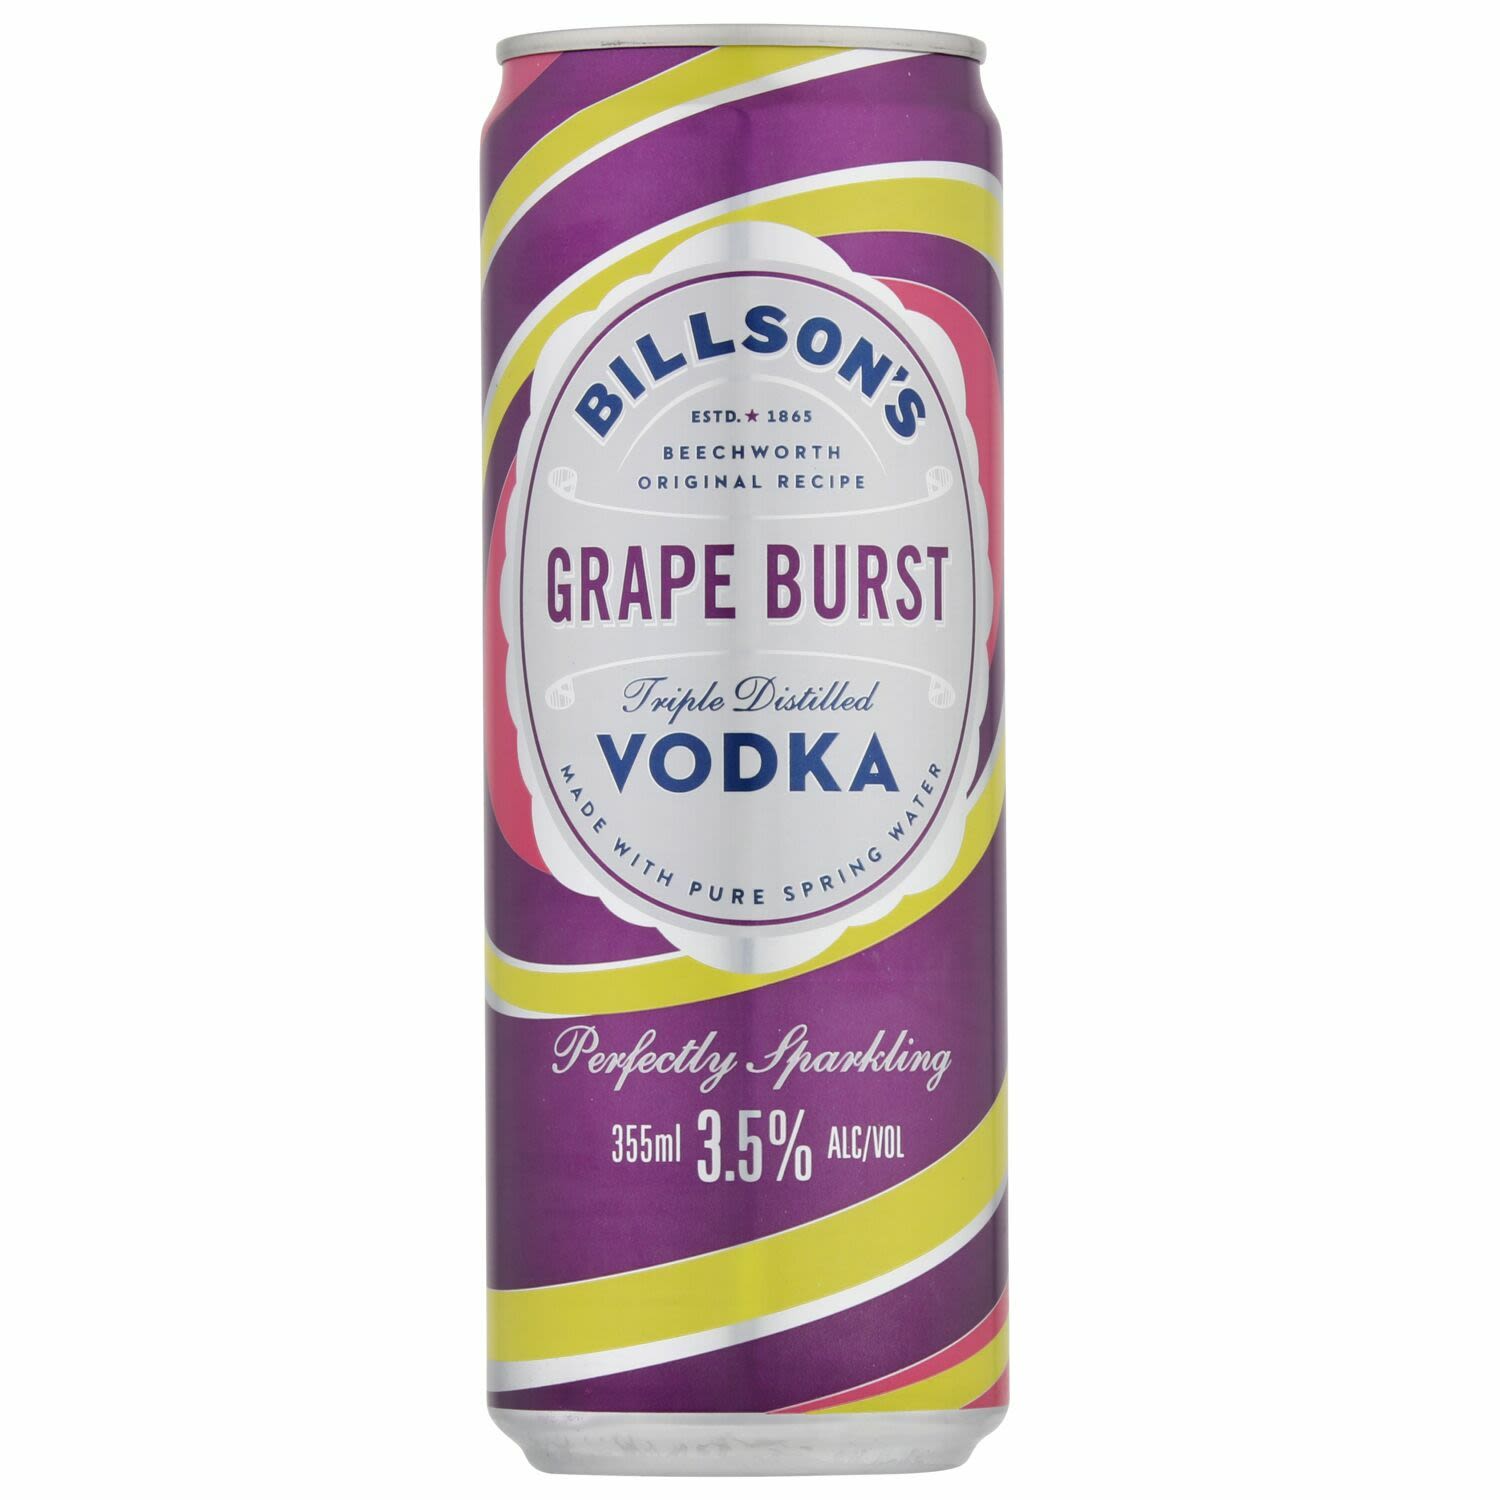 Billson's Vodka with Grape Burst Can 355mL